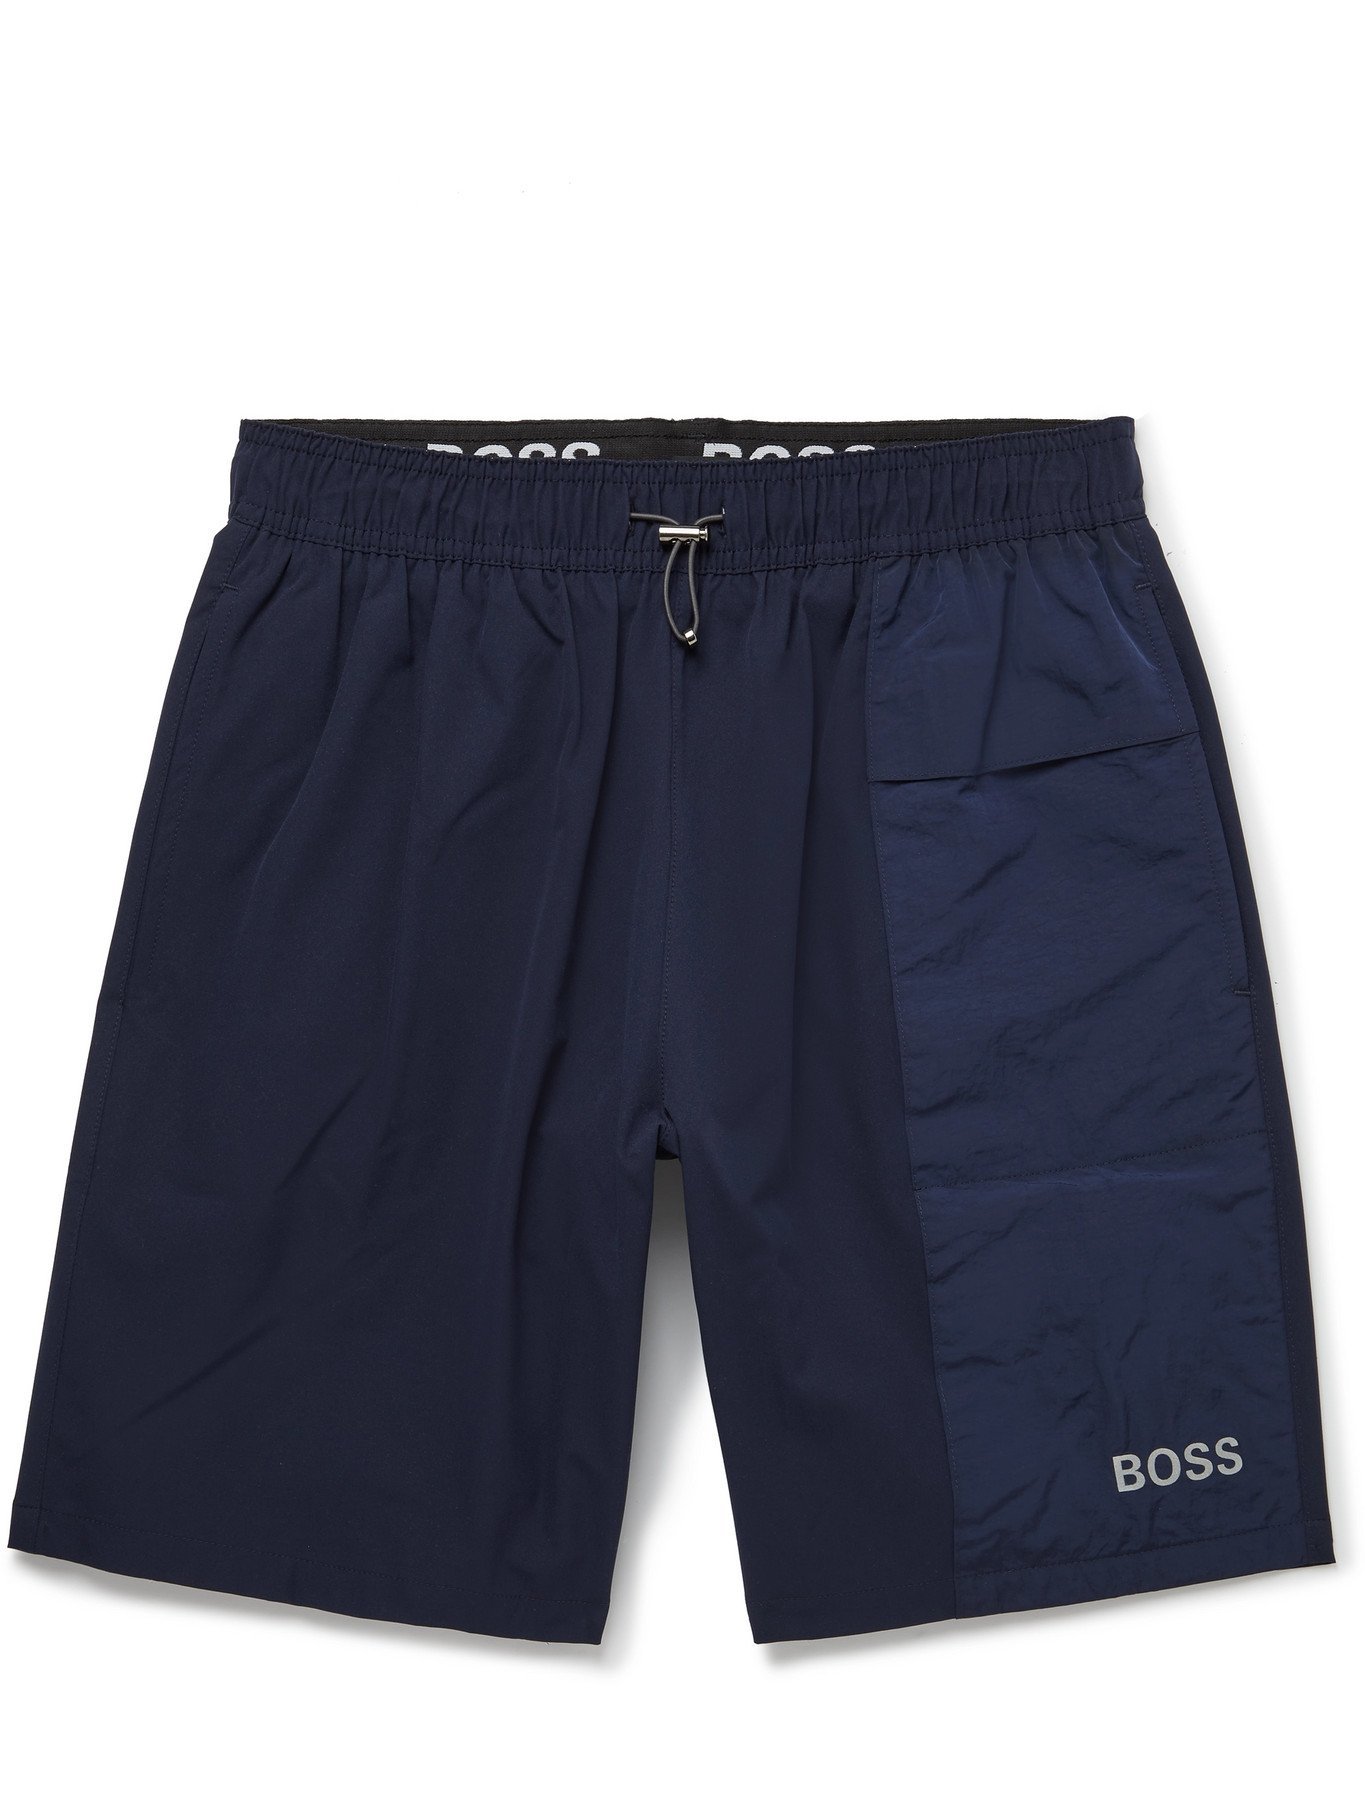 hugo boss swim shorts blue